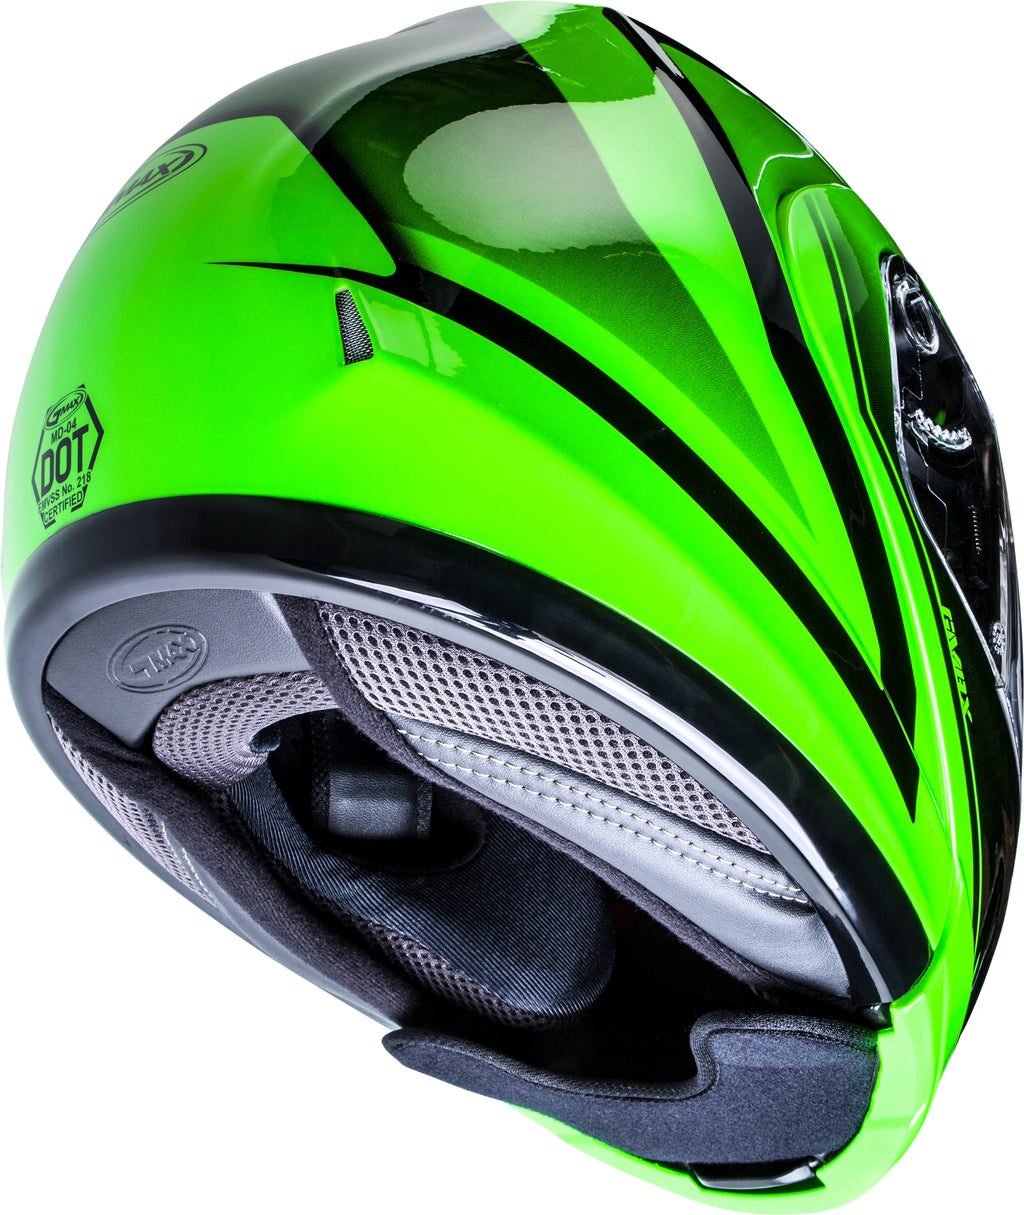 Md 04s Modular Docket Snow Helmet Neon Green/Black Xl